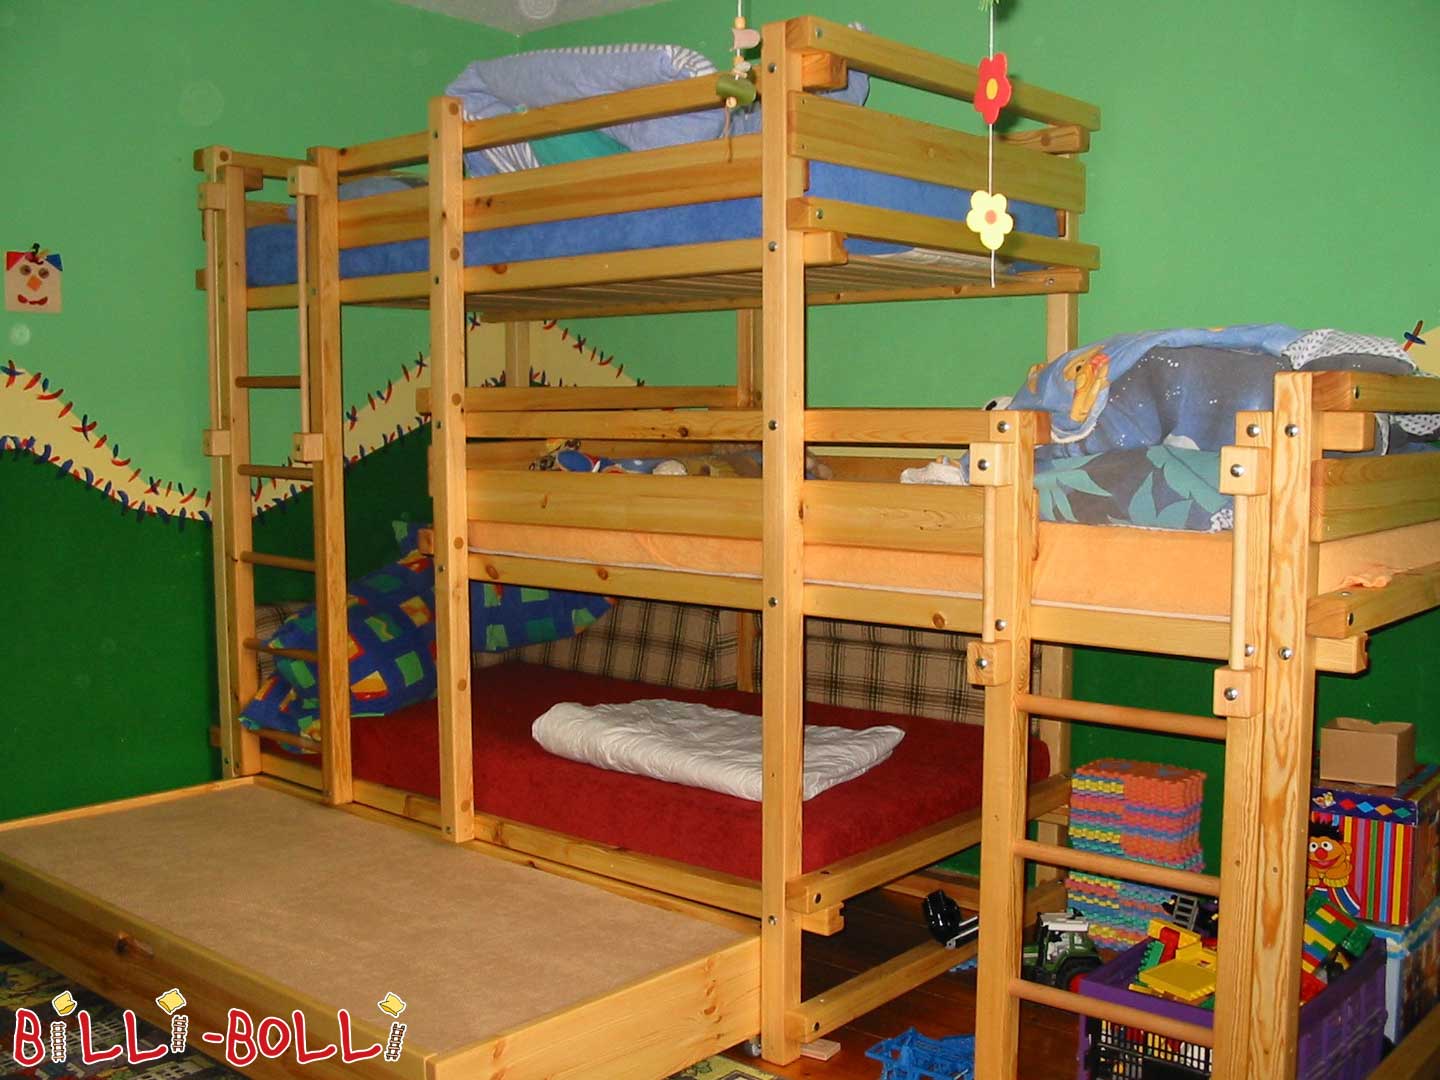 Quadruple bed (Category: second hand kids’ furniture)